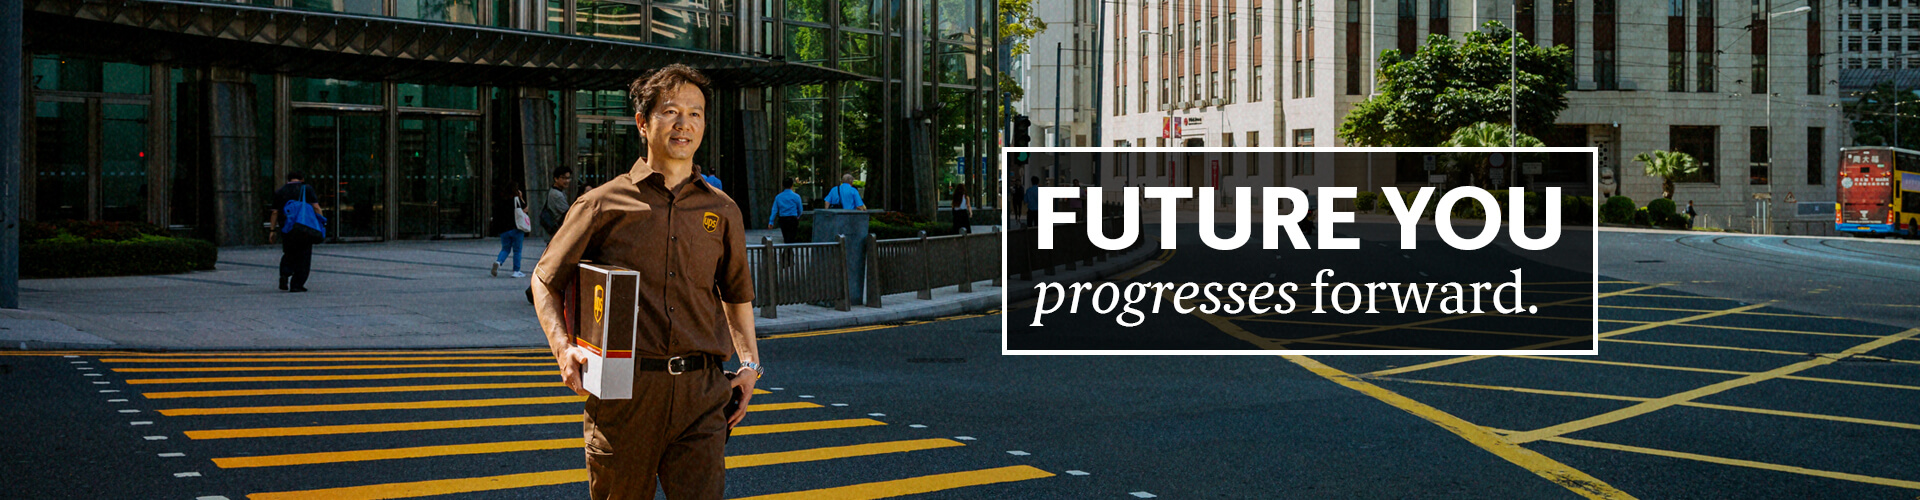 FUTURE YOU progresses forward.